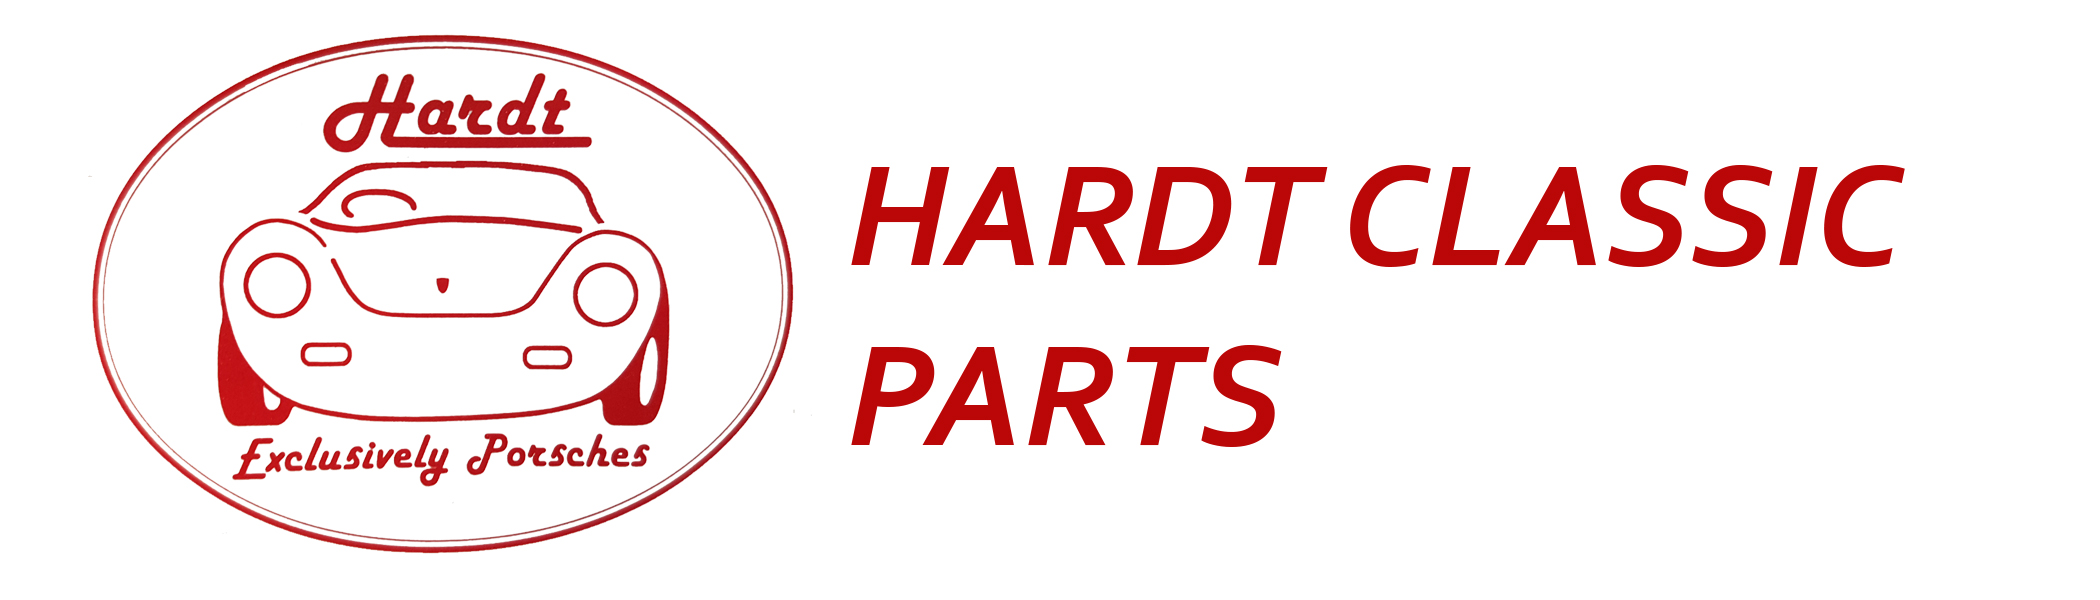 Hardt Classic Parts